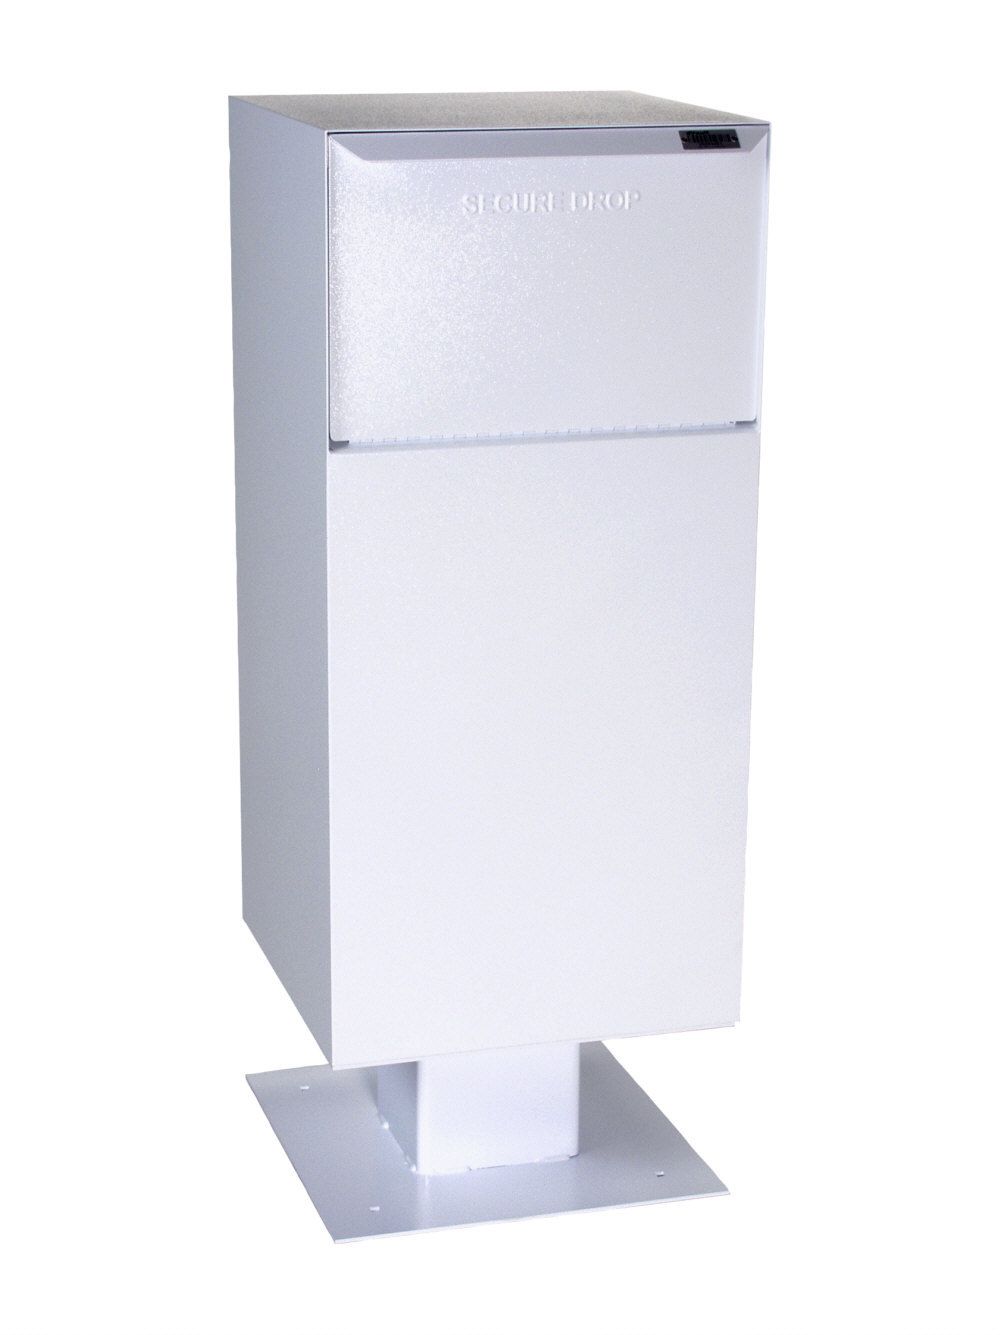 Deposit Vault with Pedestal - Curbside, Rear-Access Locking Parcel Mailbox